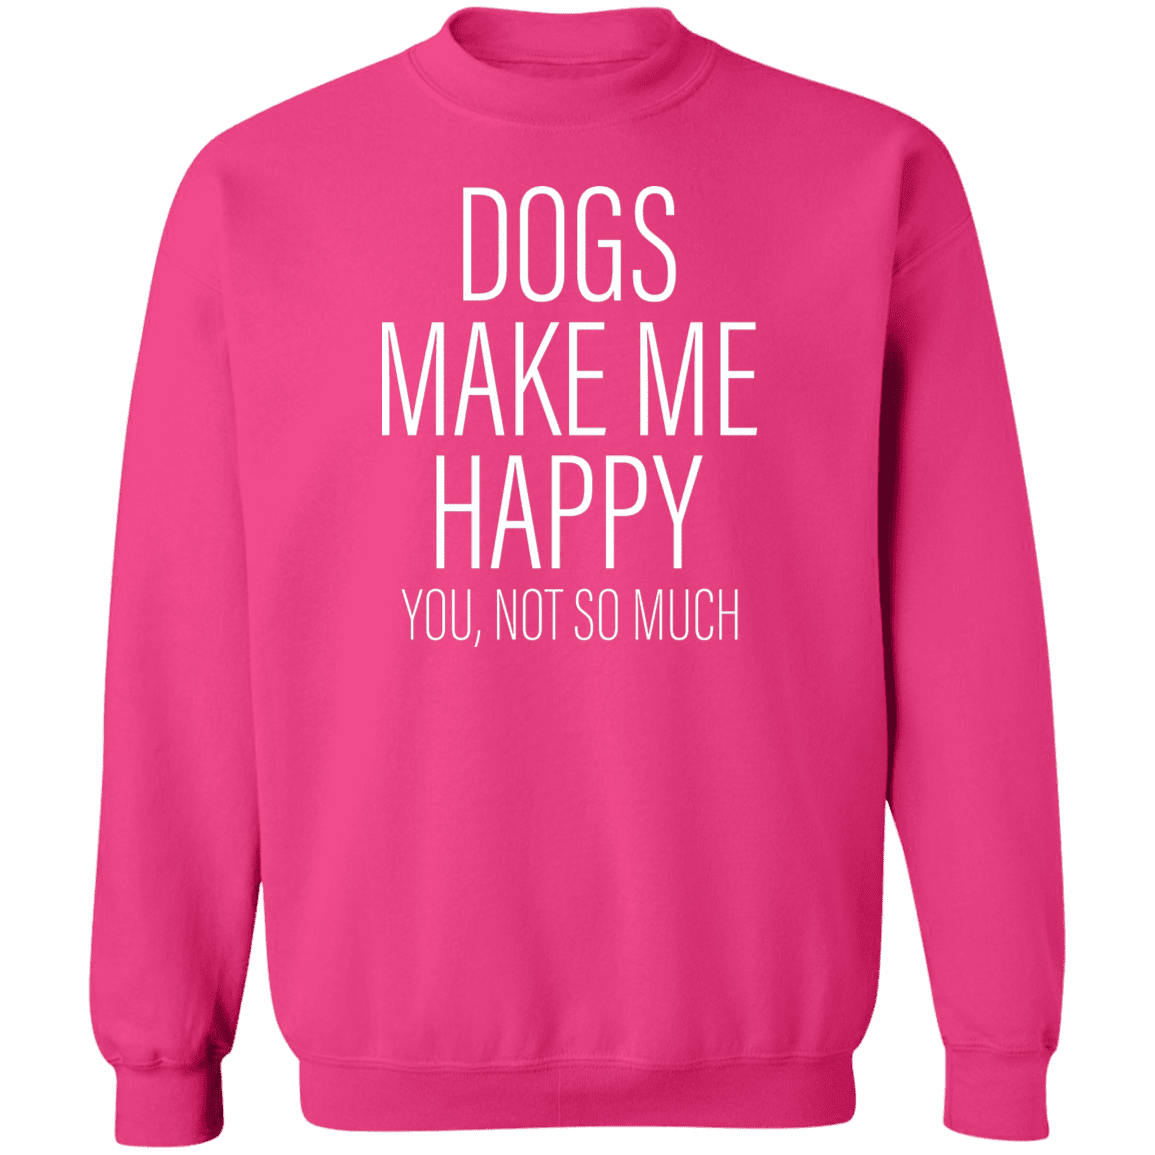 Dogs Make Me Happy - Sweatshirt.